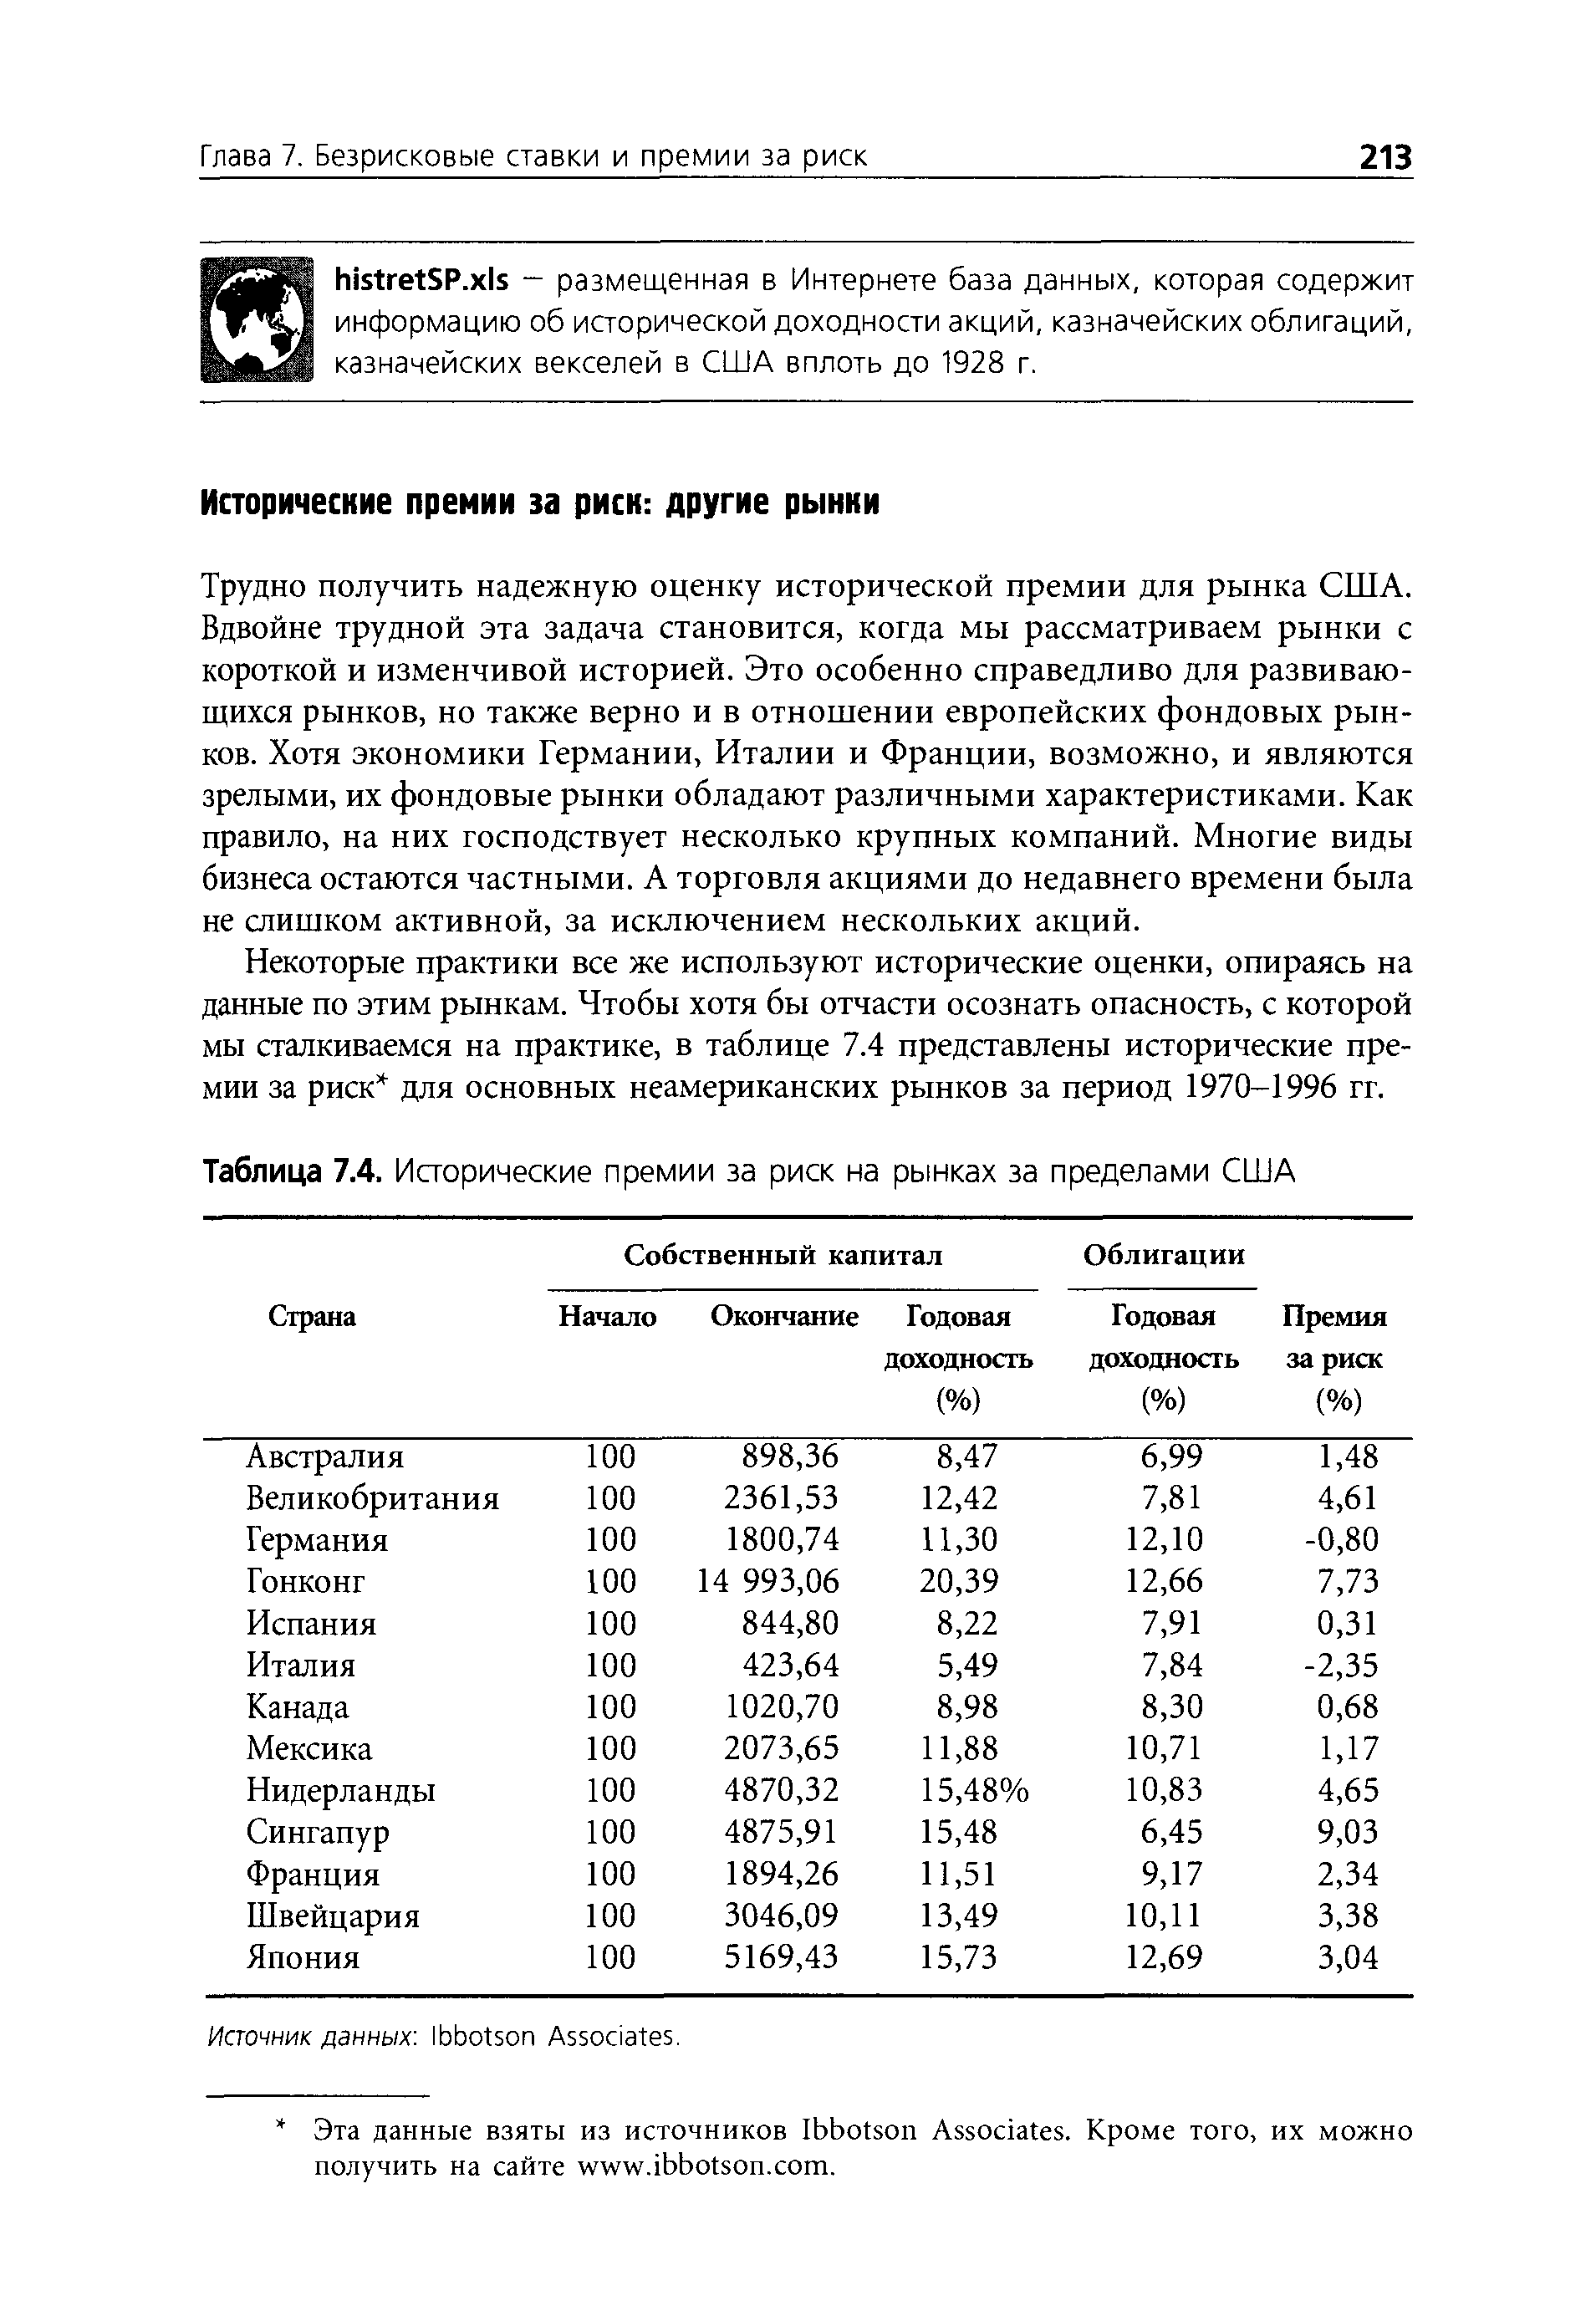 Таблица 7.4. Исторические премии за риск на рынках за пределами США
